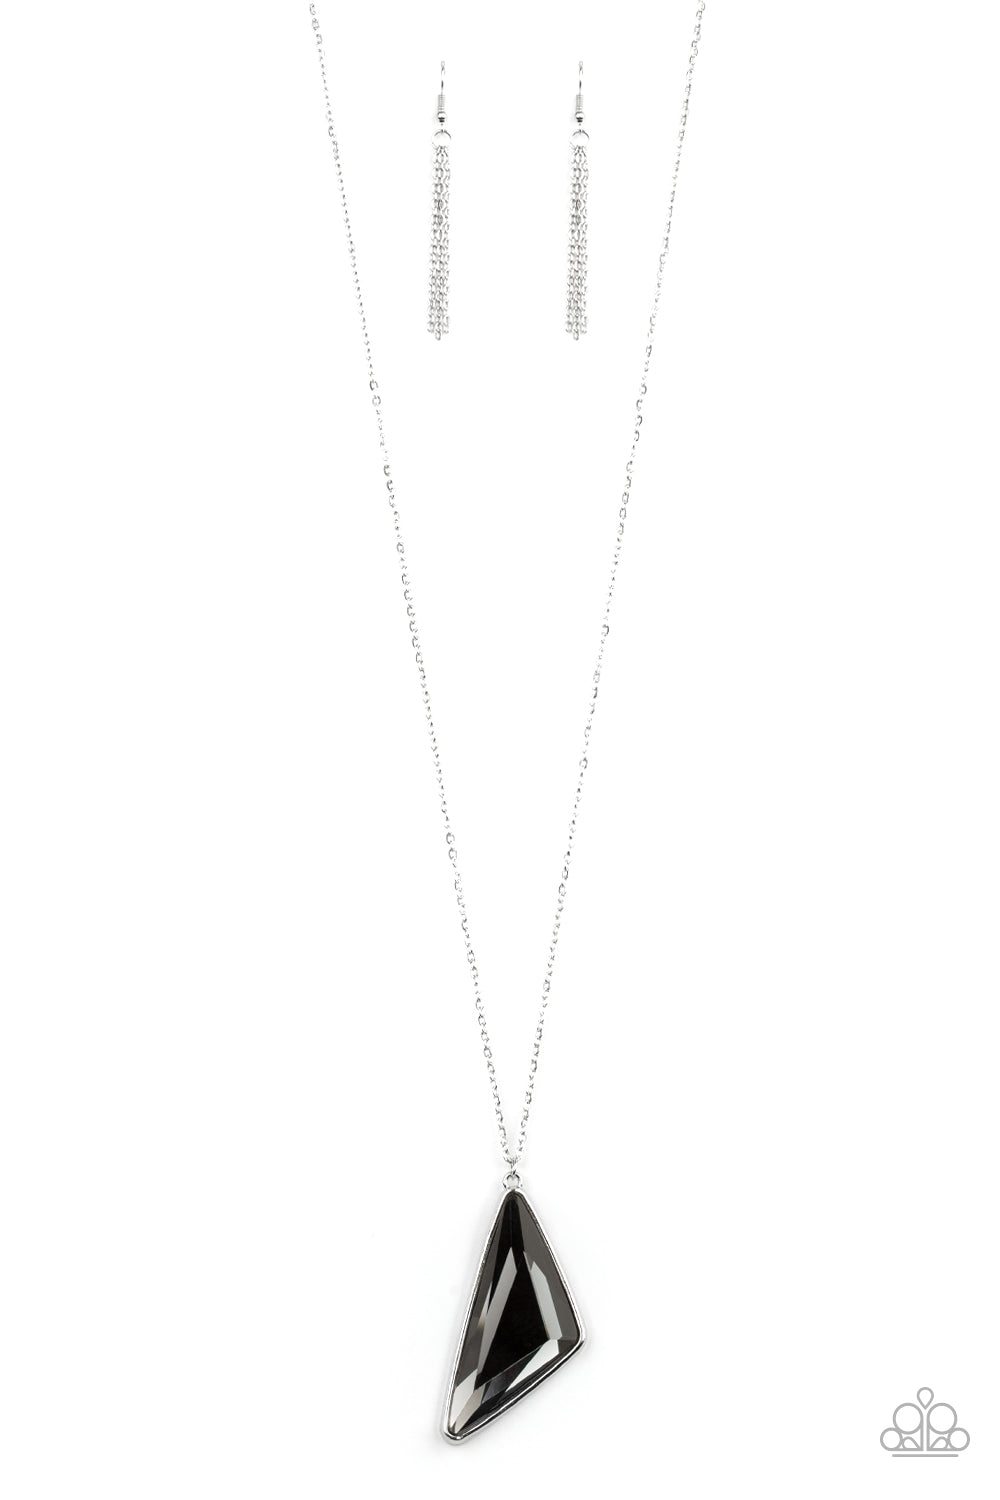 Ultra Sharp - Silver Necklace freeshipping - JewLz4u Gemstone Gallery